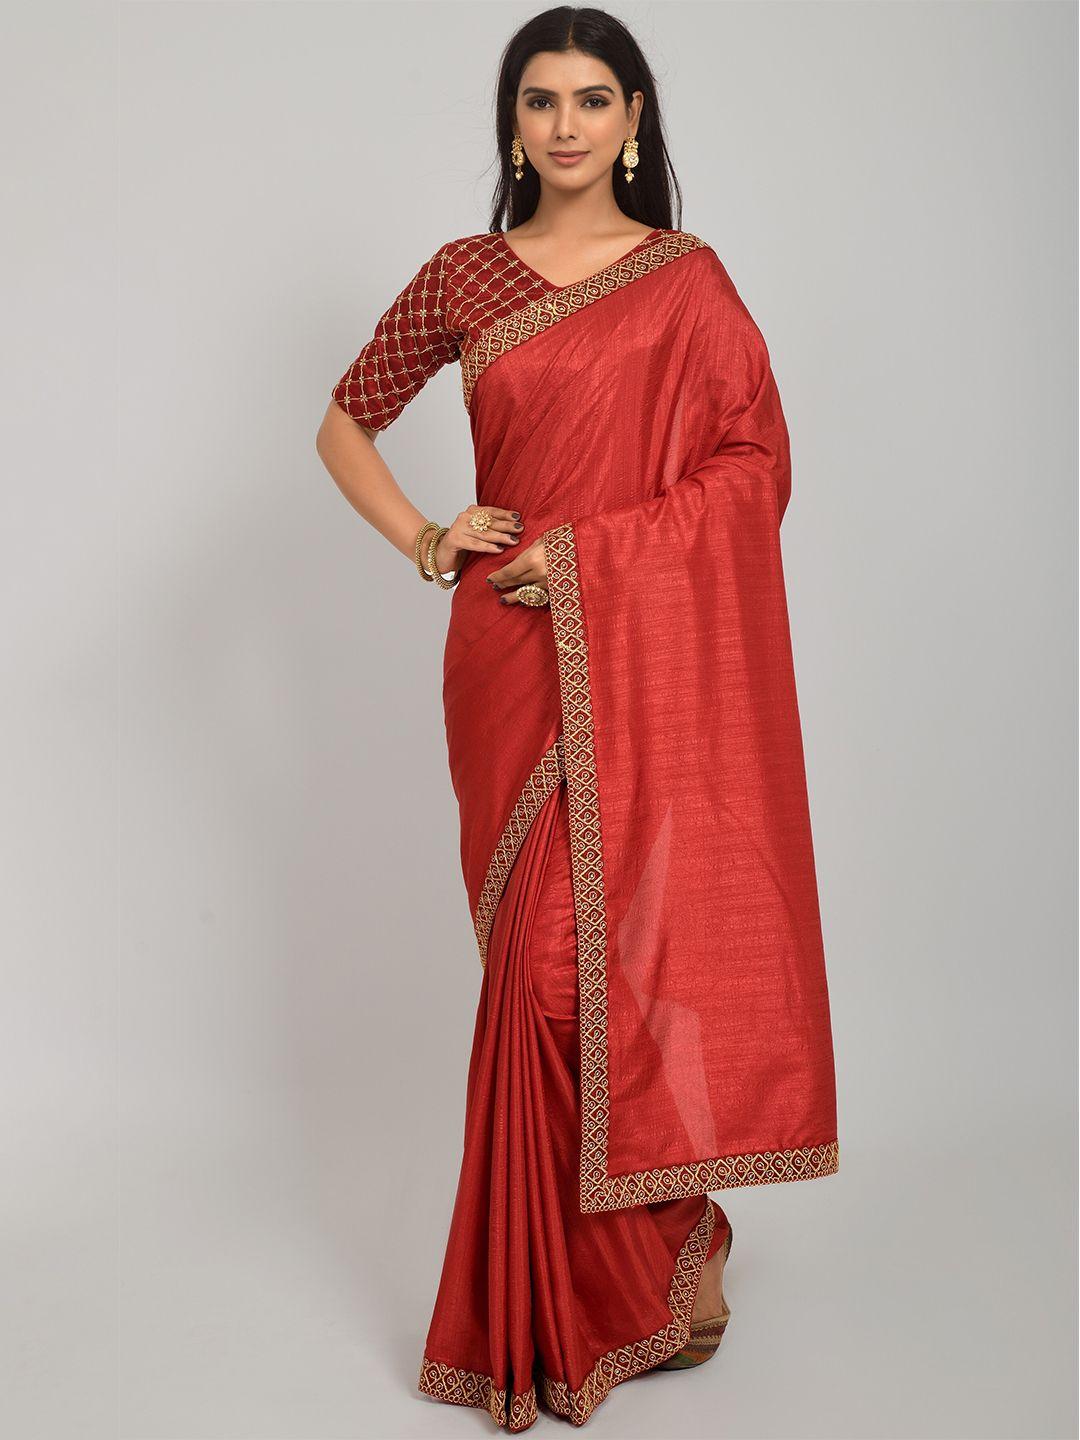 nplash fashion maroon ethnic motifs embroidered silk cotton saree